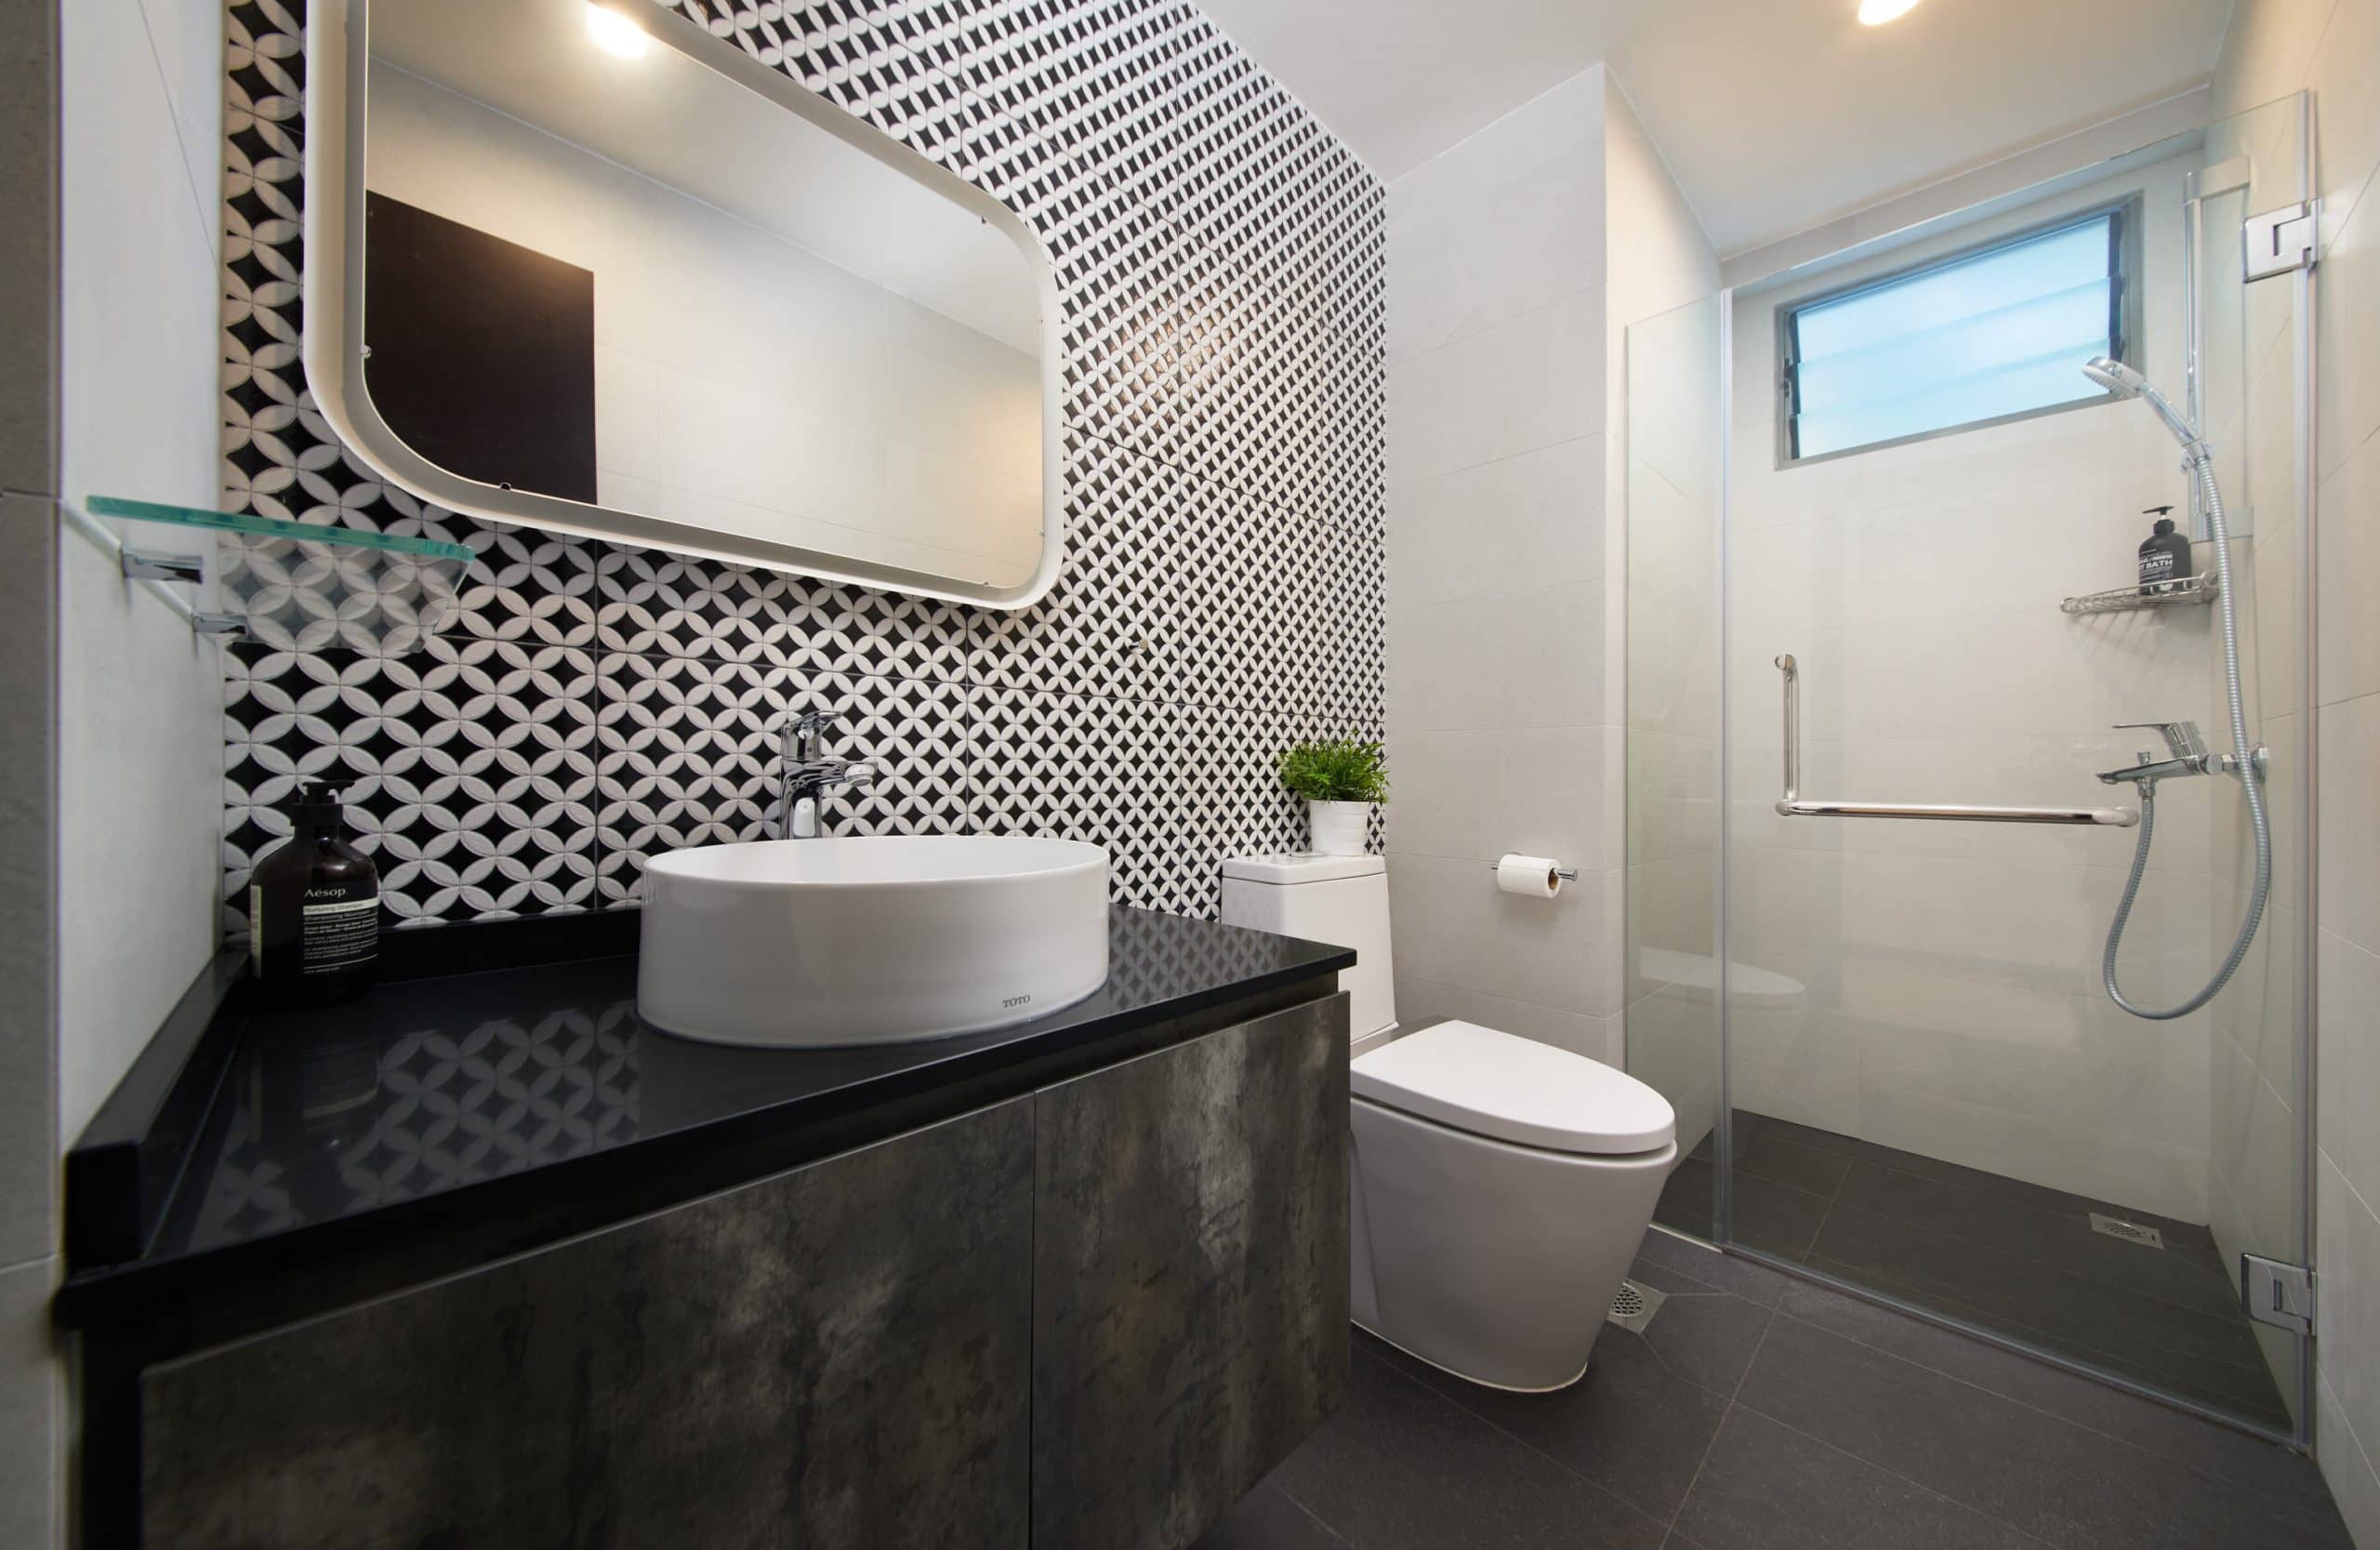 Condo Interior Design Styles to Try: Bathroom Edition - ConDominium Home Interior Design Renovation At The Quintet Common Bathroom ScaleD 1